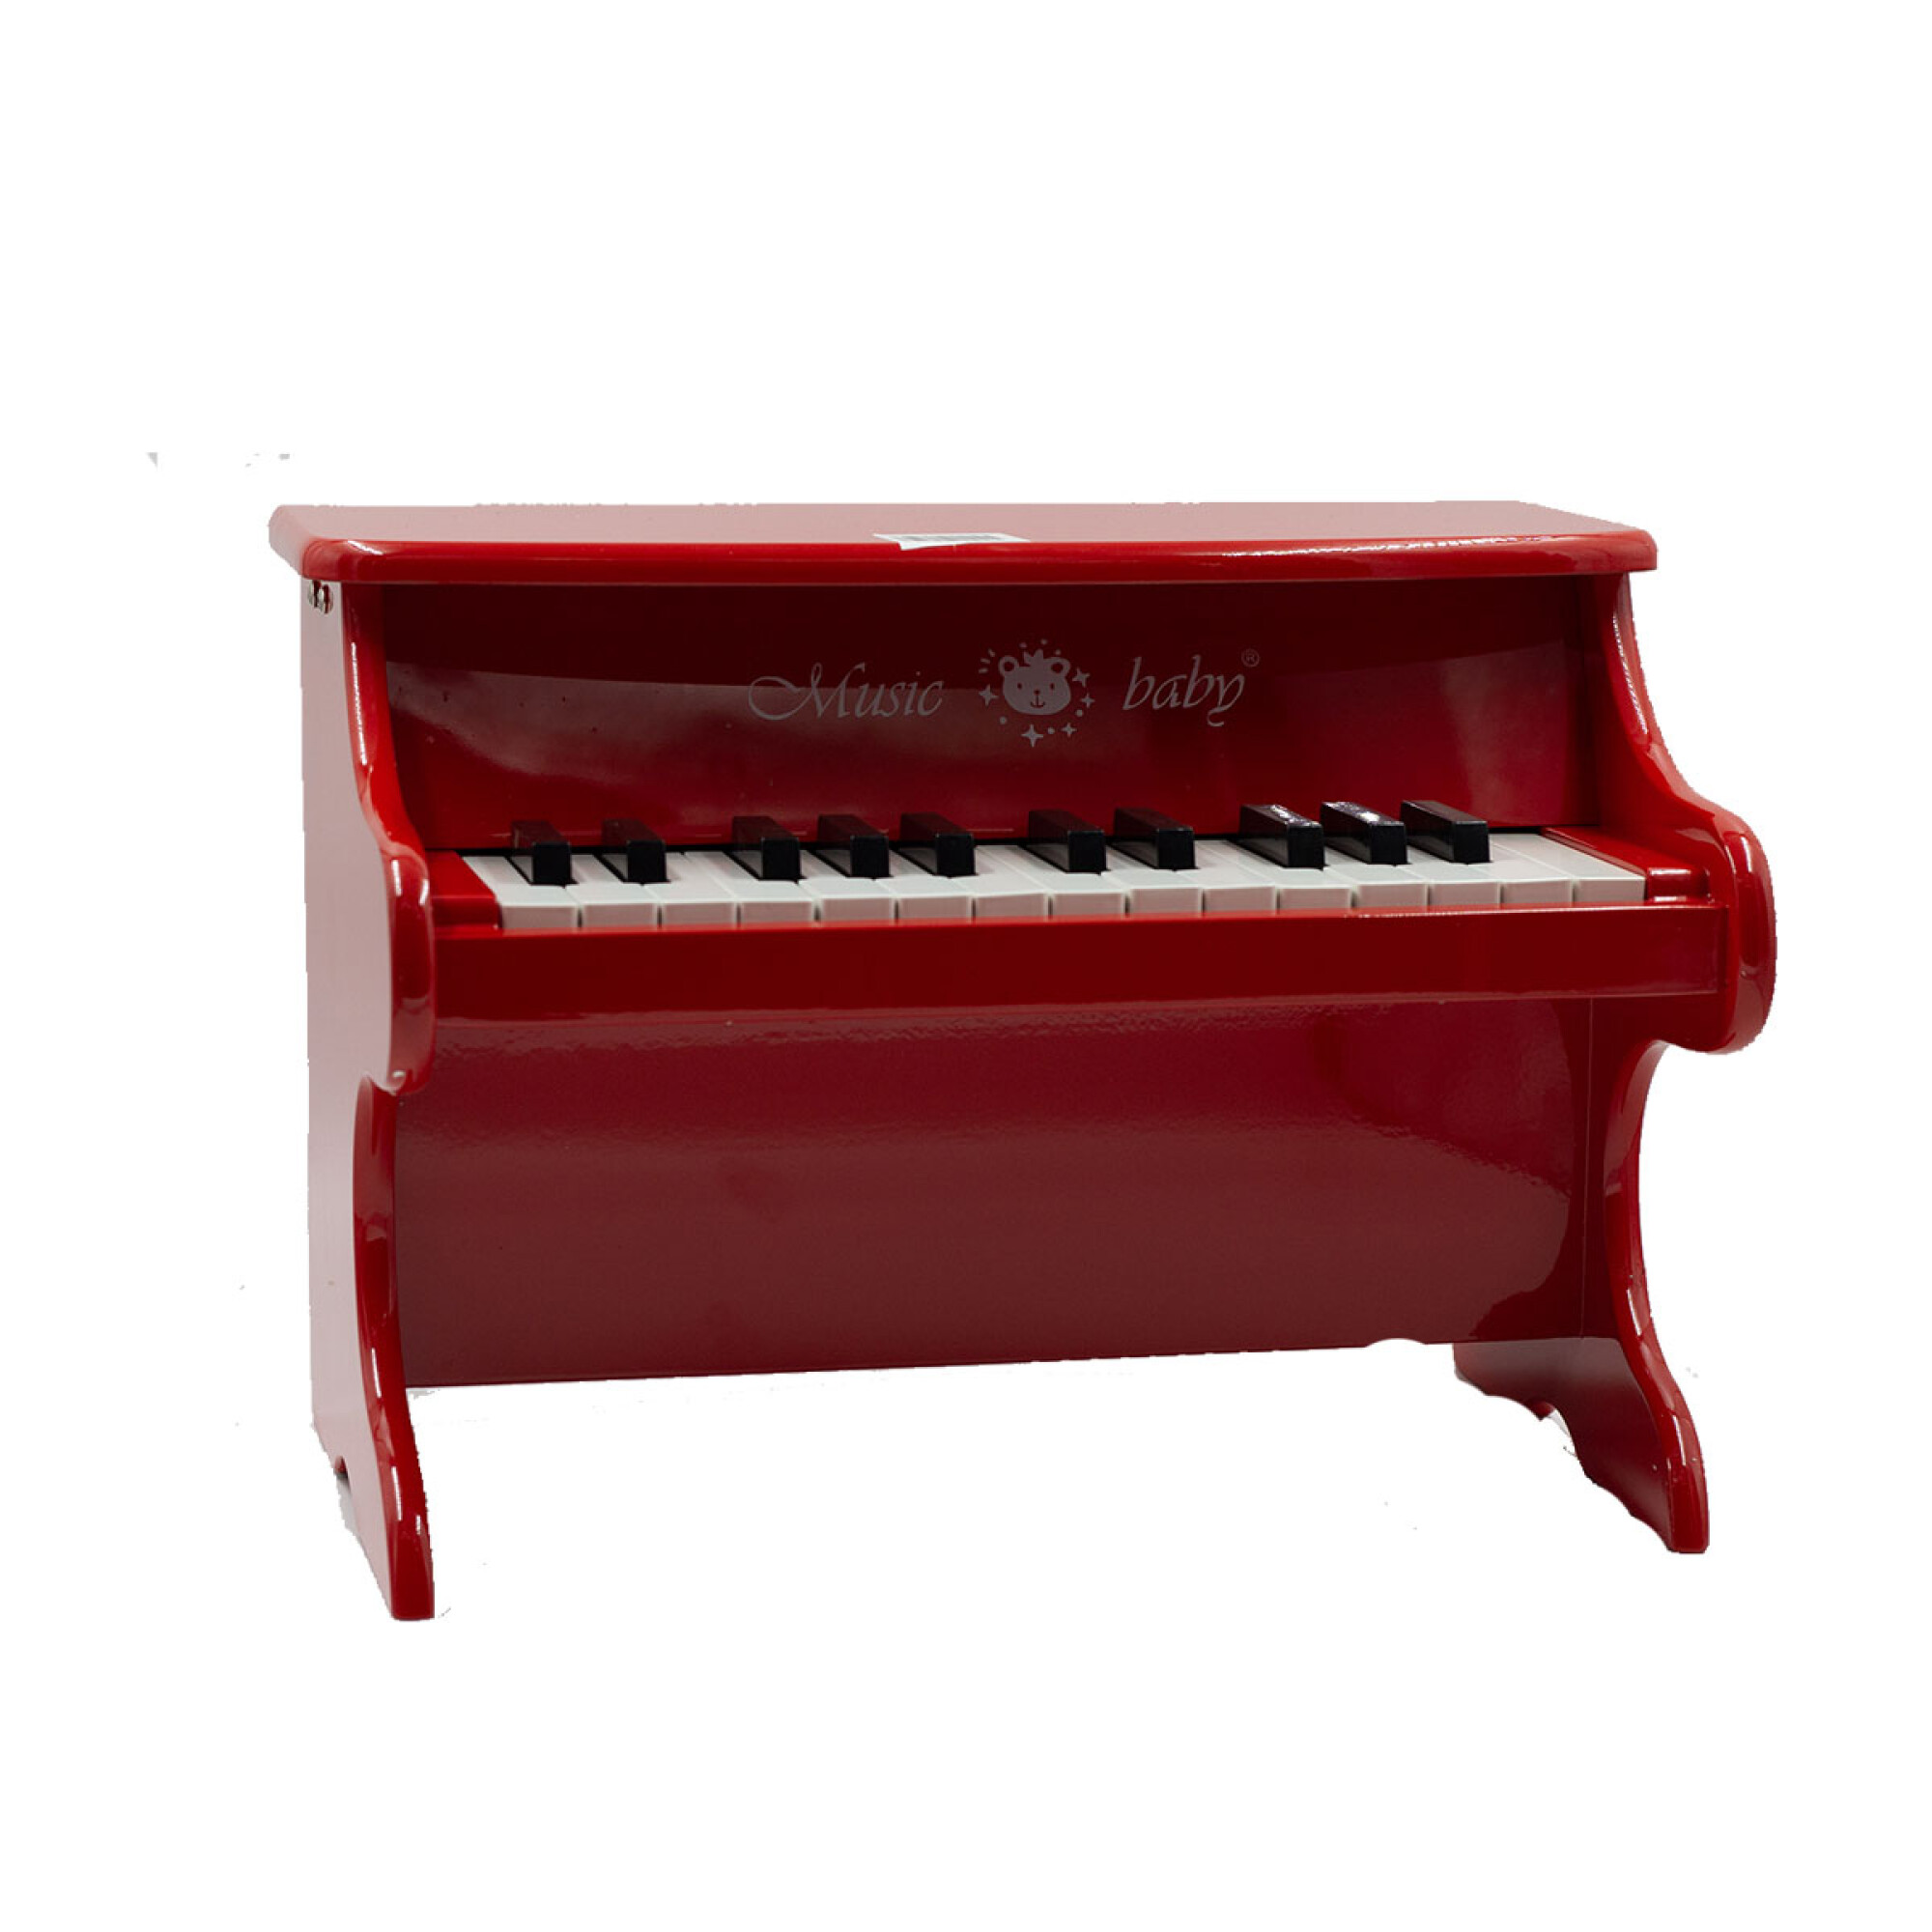 https://f.fcdn.app/imgs/330c7c/woofer.com.uy/woofuy/0b6b/original/catalogo/DW030-DW030_1/2000-2000/piano-infantil-vertical-rojo-ideal-para-ninos-piano-infantil-vertical-rojo-ideal-para-ninos.jpg